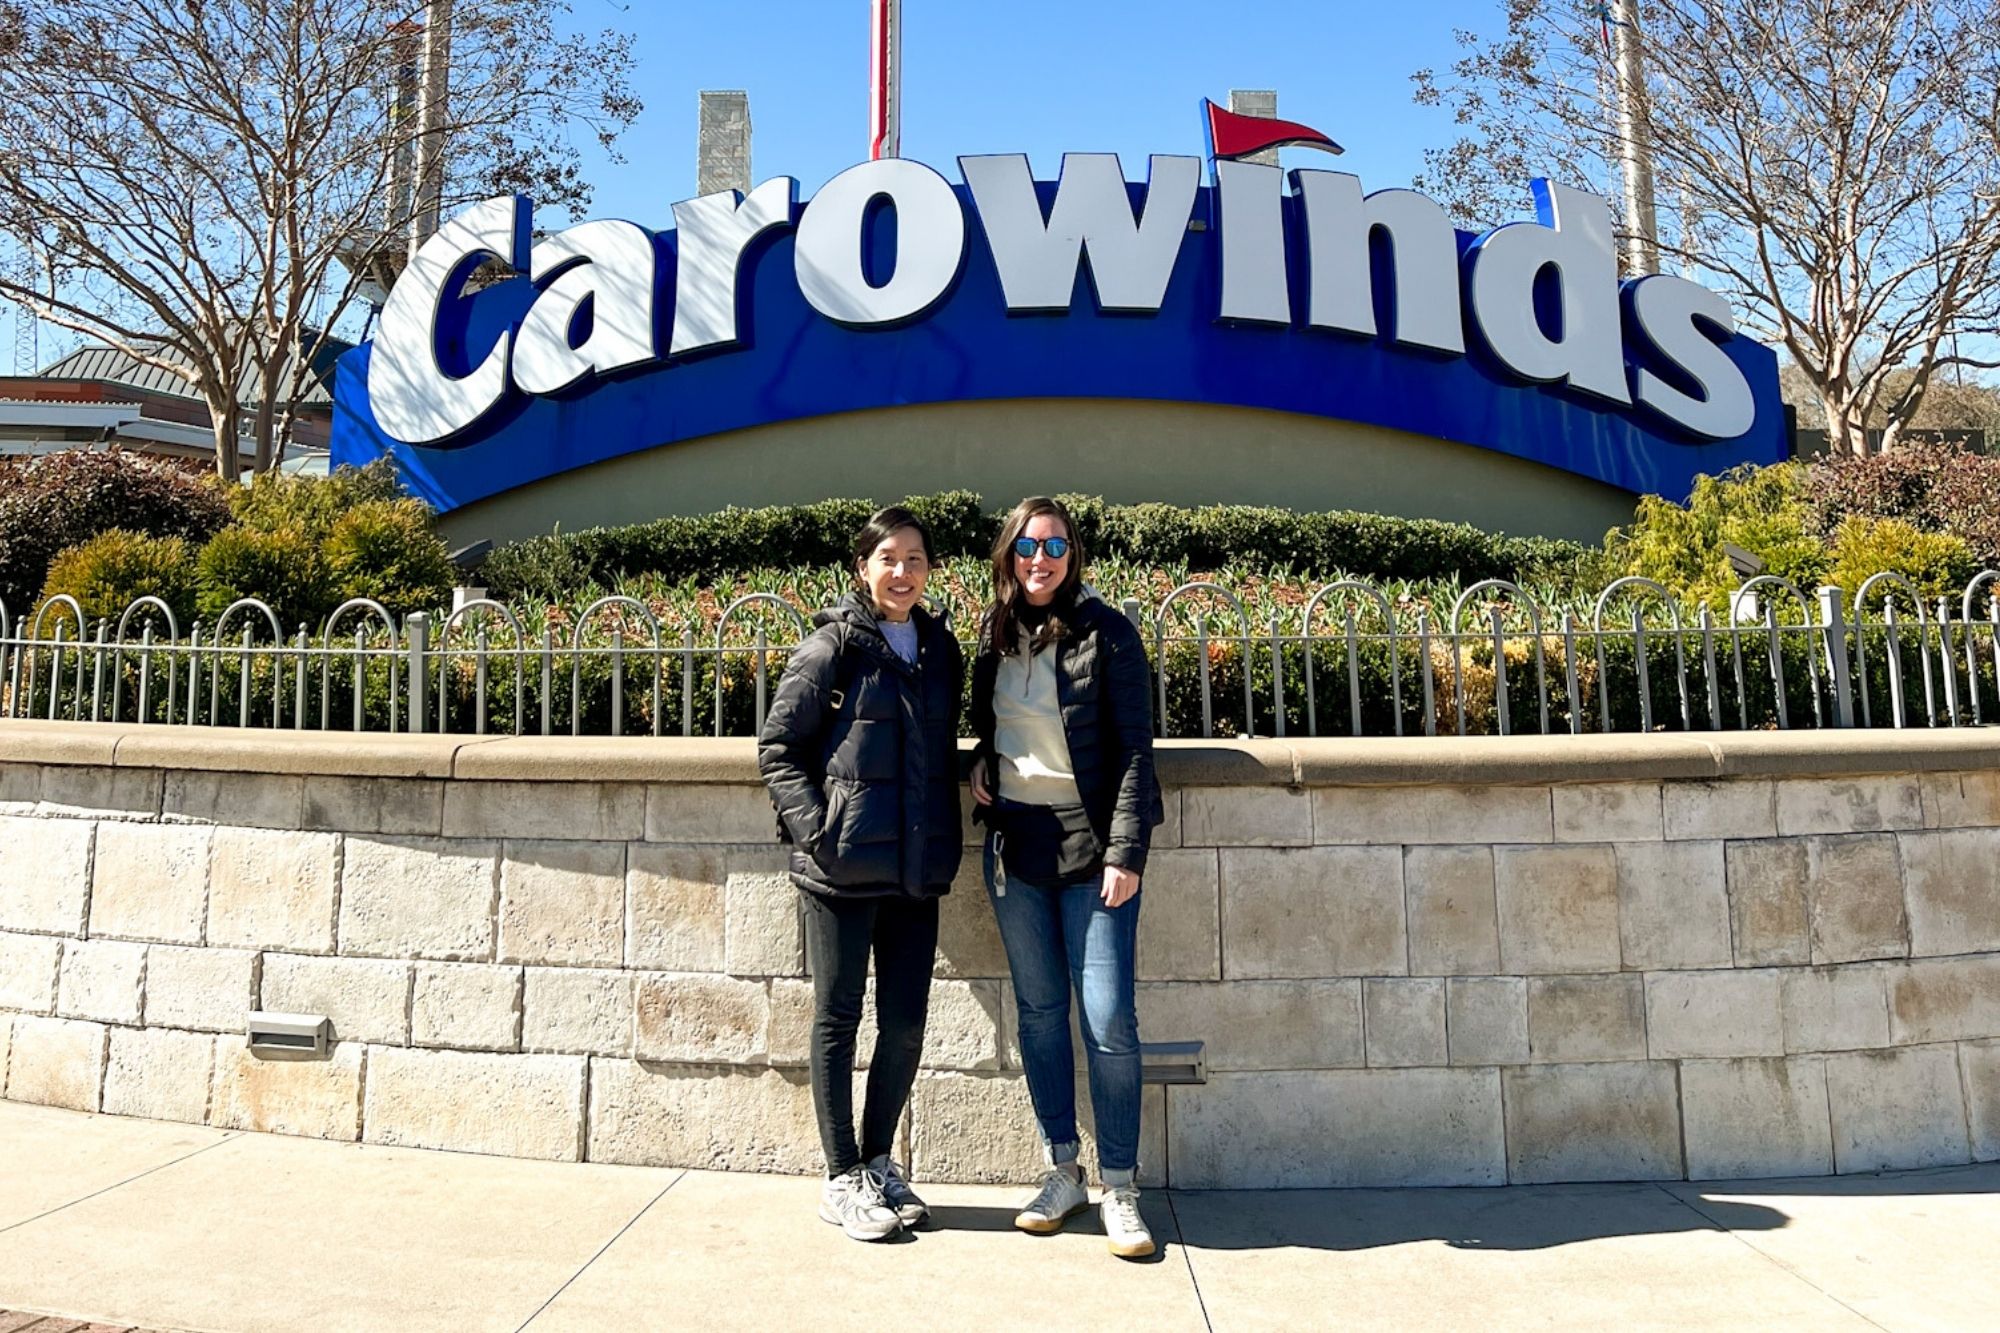 Amanda and Alyssa at the Carowinds entrance